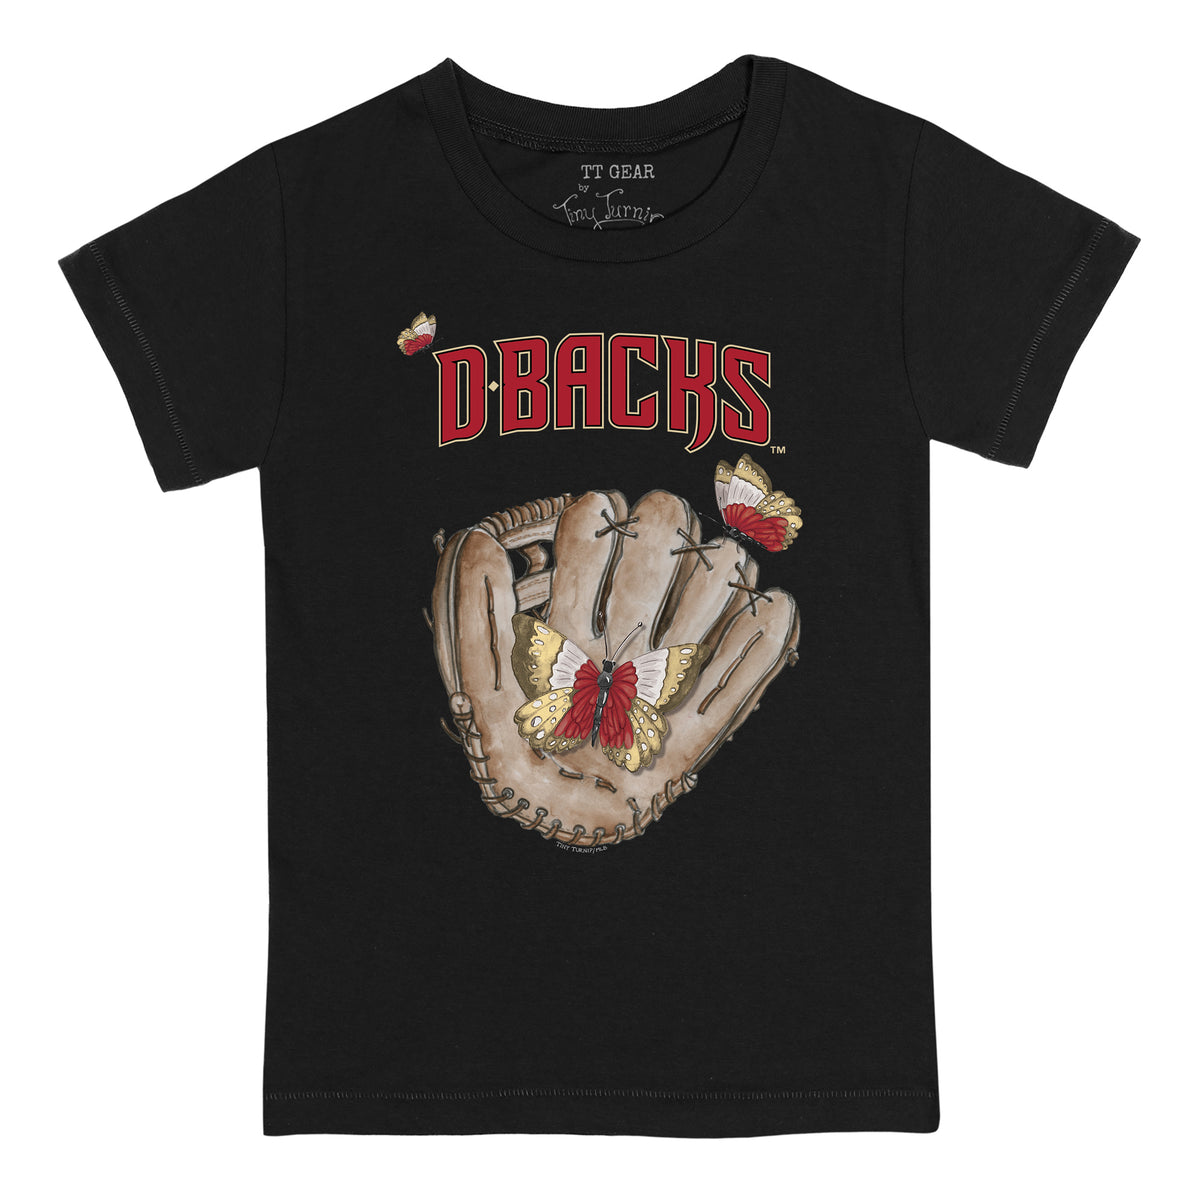 Arizona Diamondbacks Butterfly Glove Tee Shirt